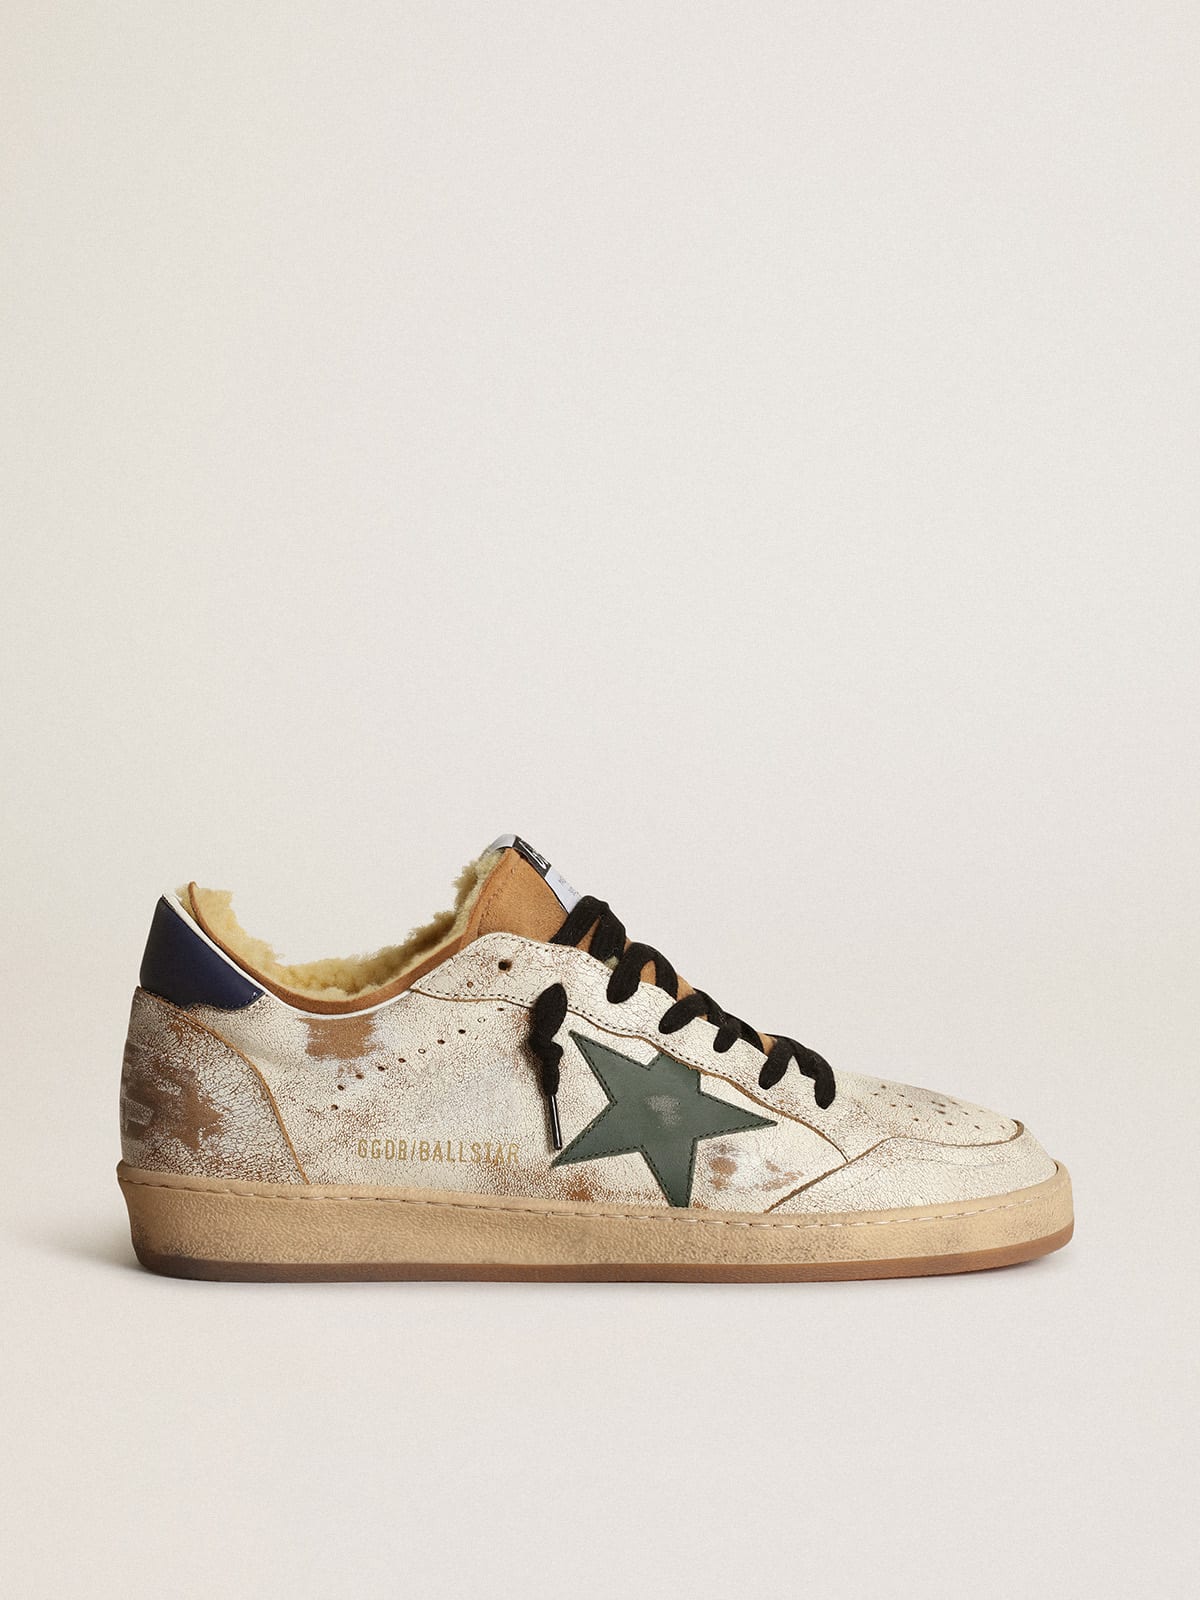 Golden Goose - Sneakers Ball Star en cuir brillant blanc avec étoile en cuir vert foncé et doublure en shearling in 